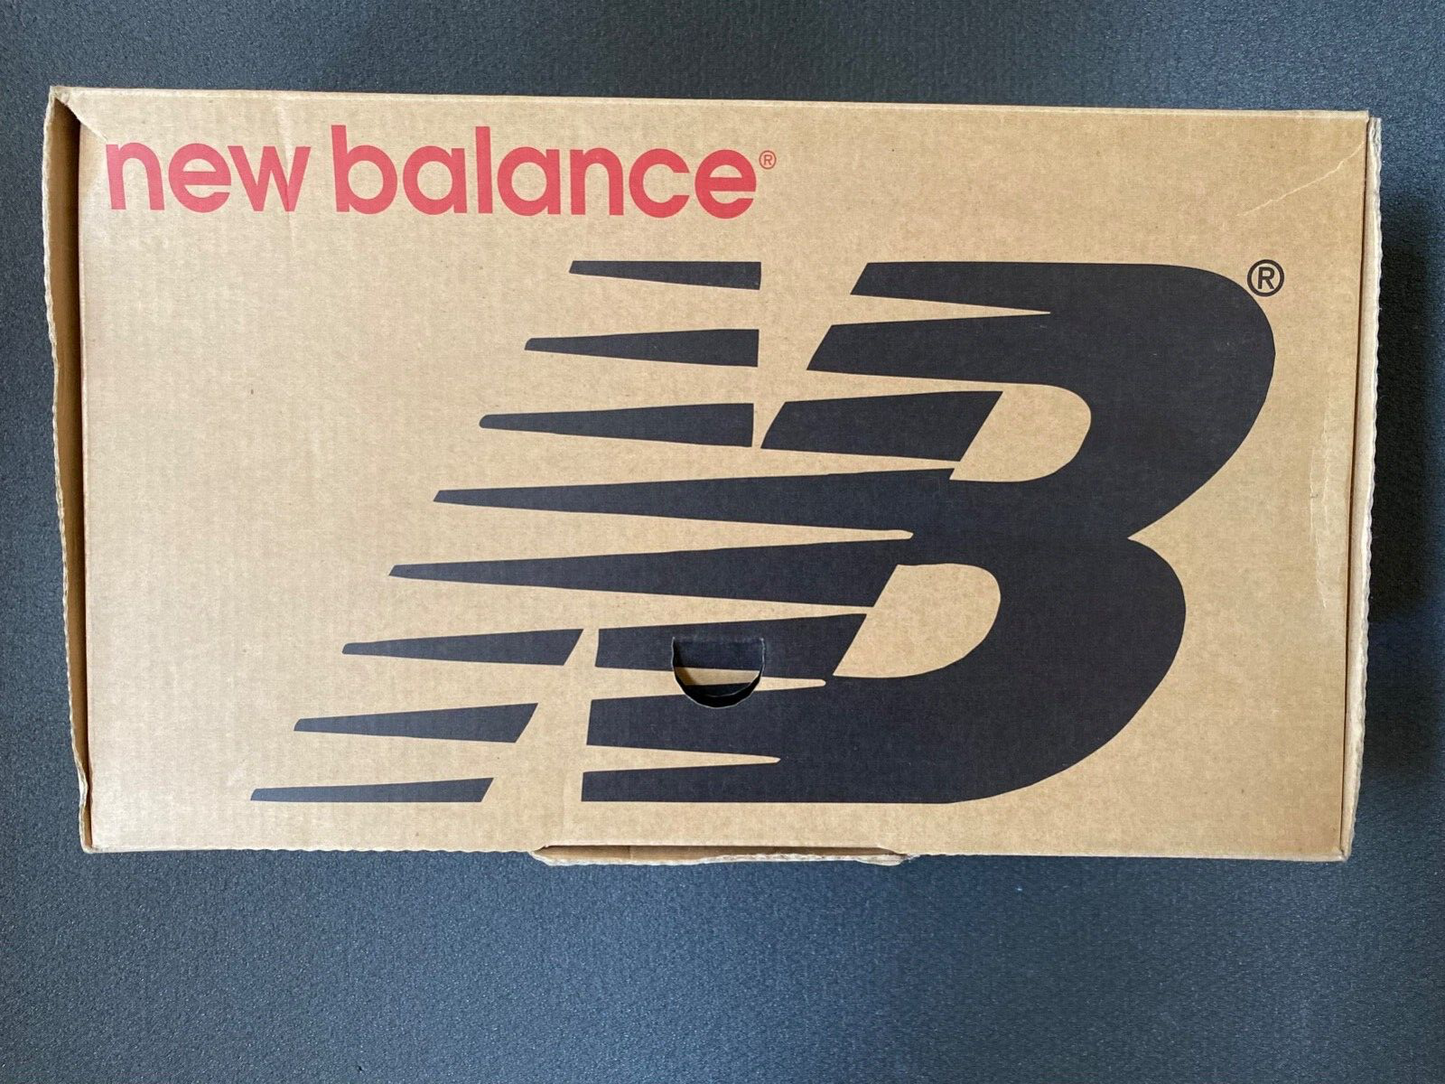 Box & Postcard for New Balance 577 Thomas i Punkt M577WHT -EMPTY BOX & POSTCARD-